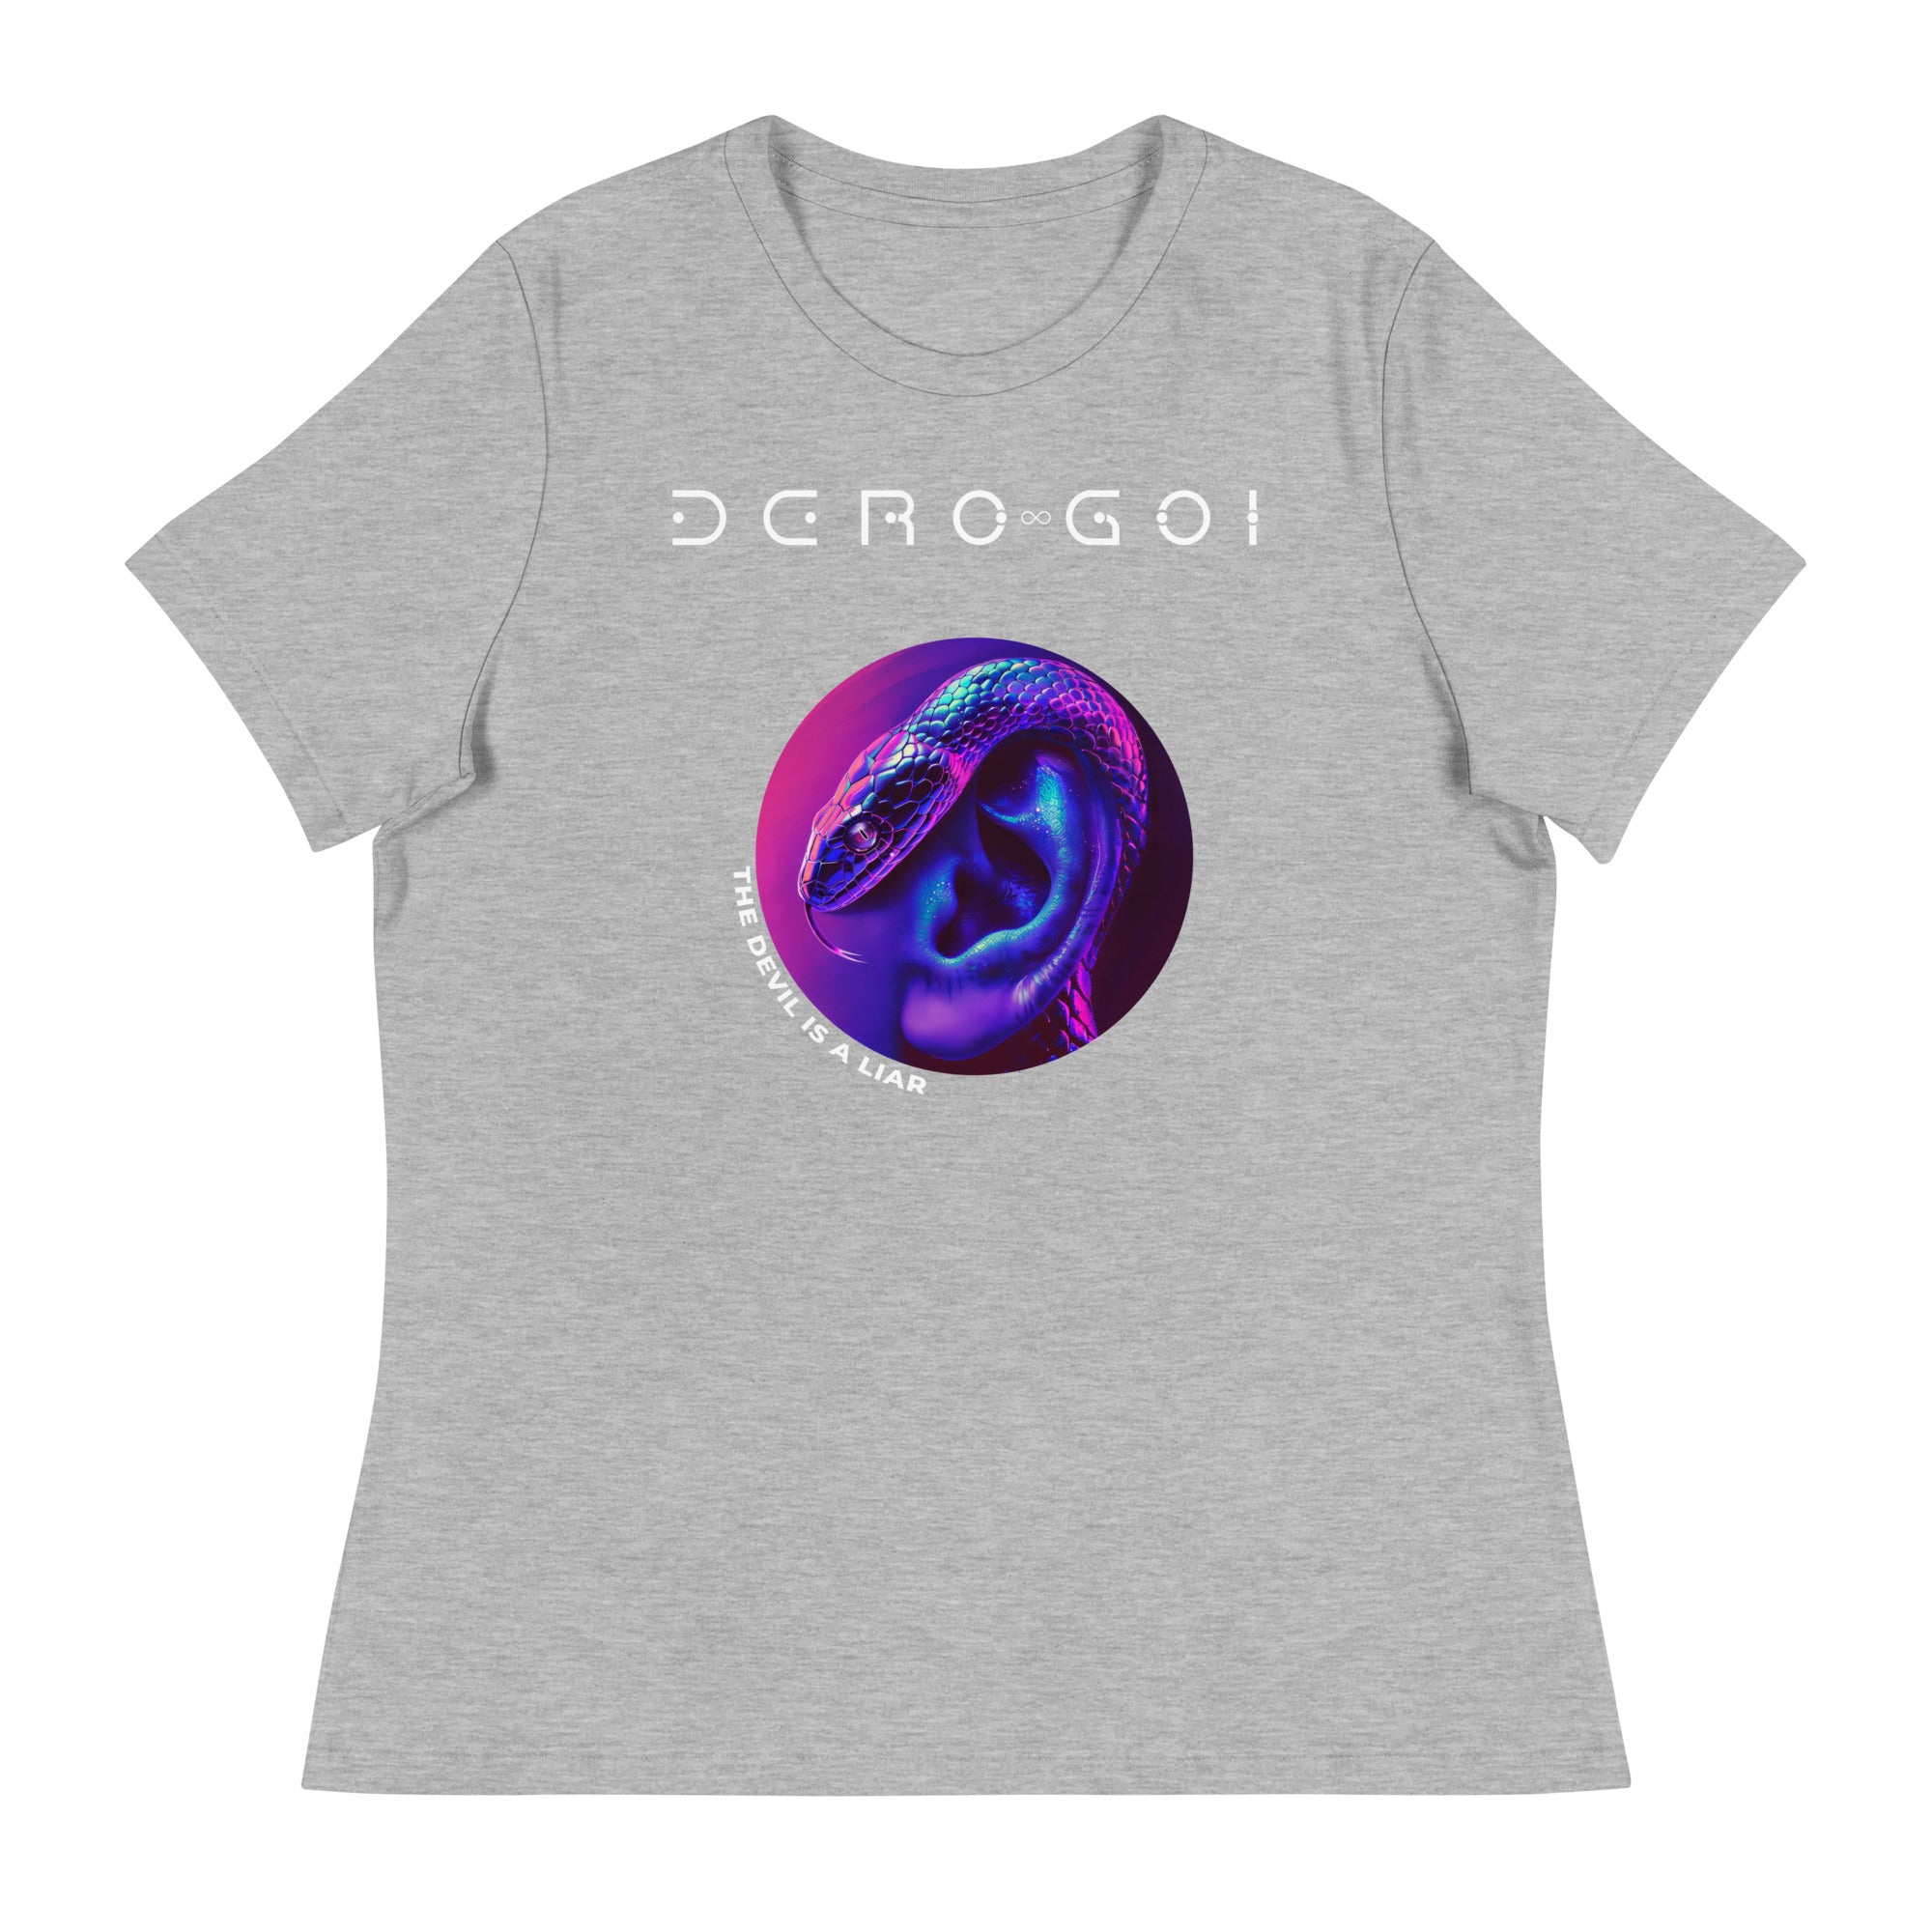 DERO GOI - The Devil is a Liar - Women's Relaxed T-Shirt